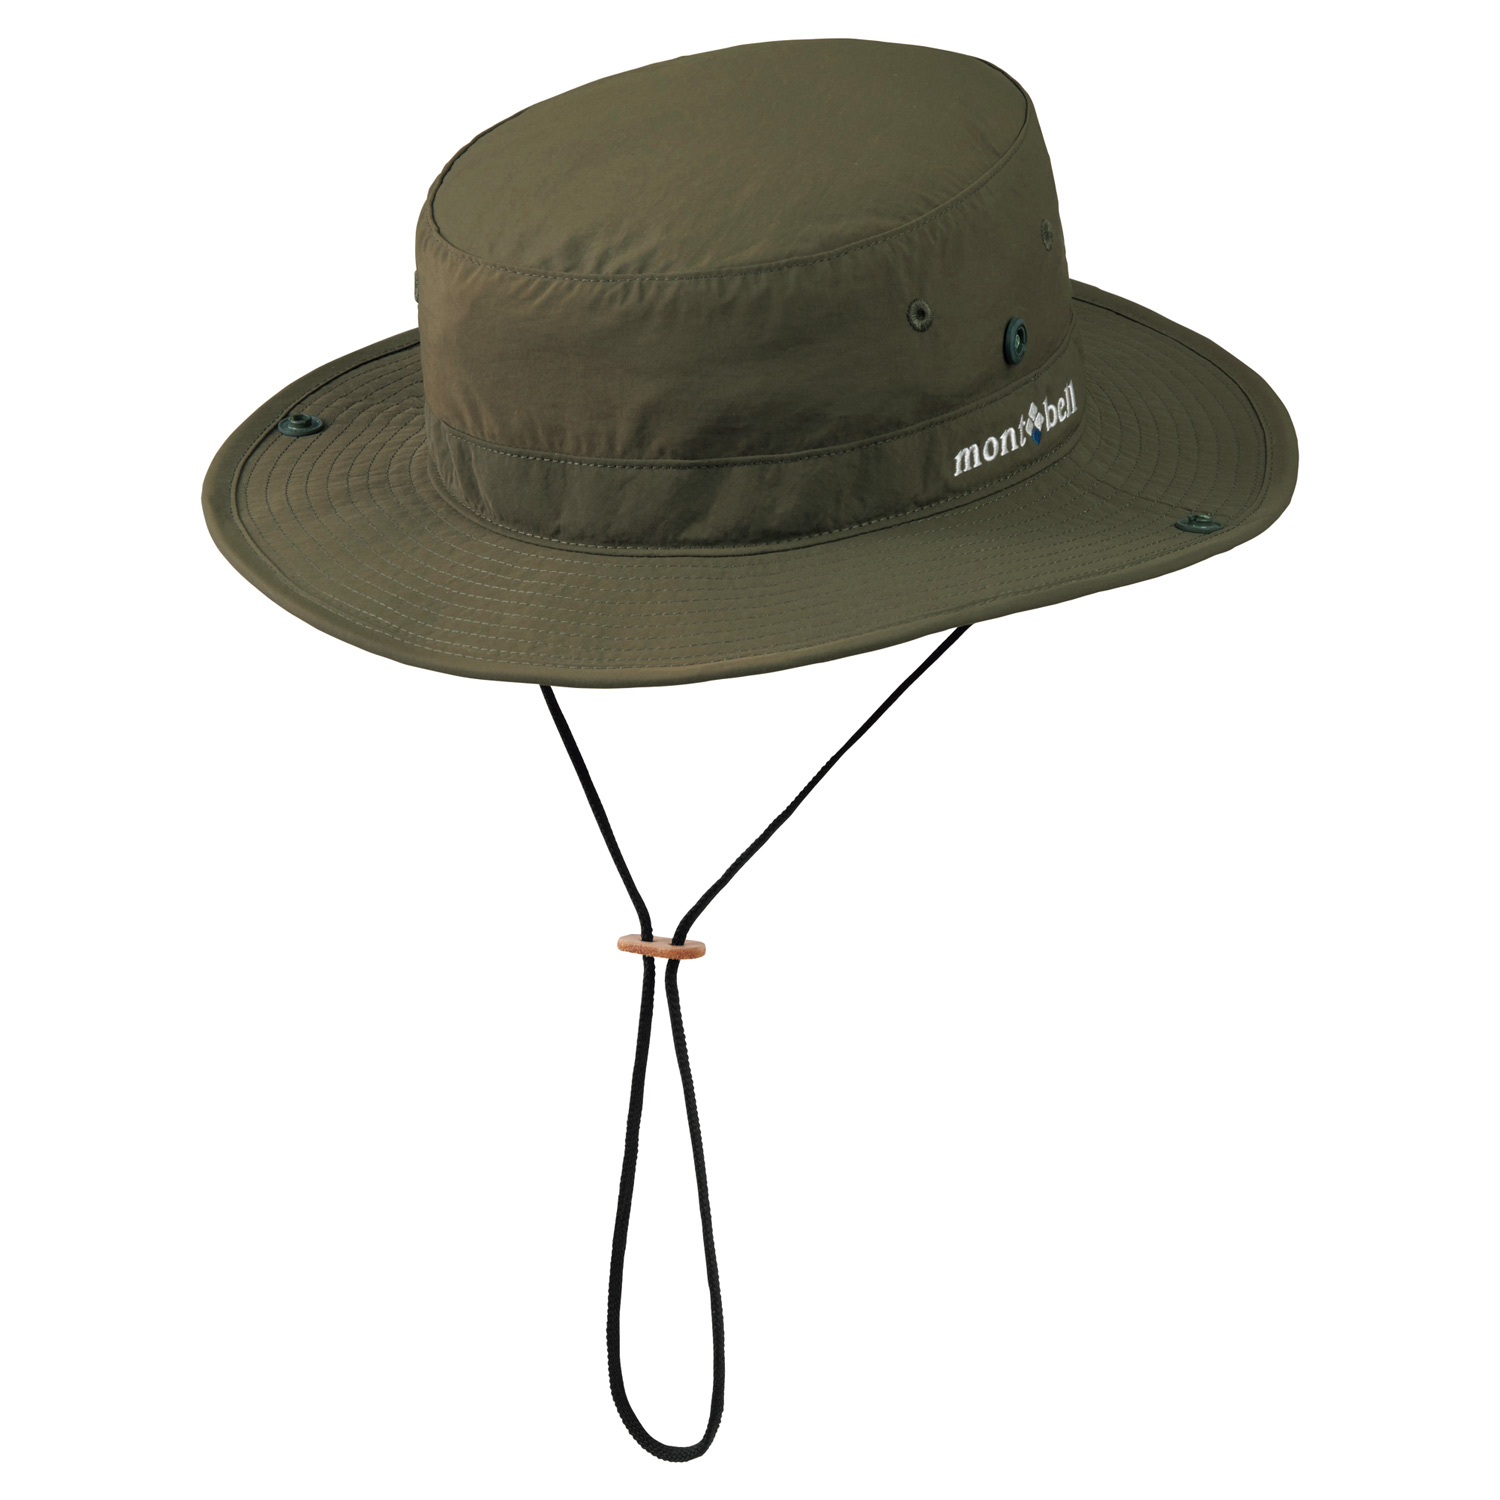 Buy Fishing Hats & Caps